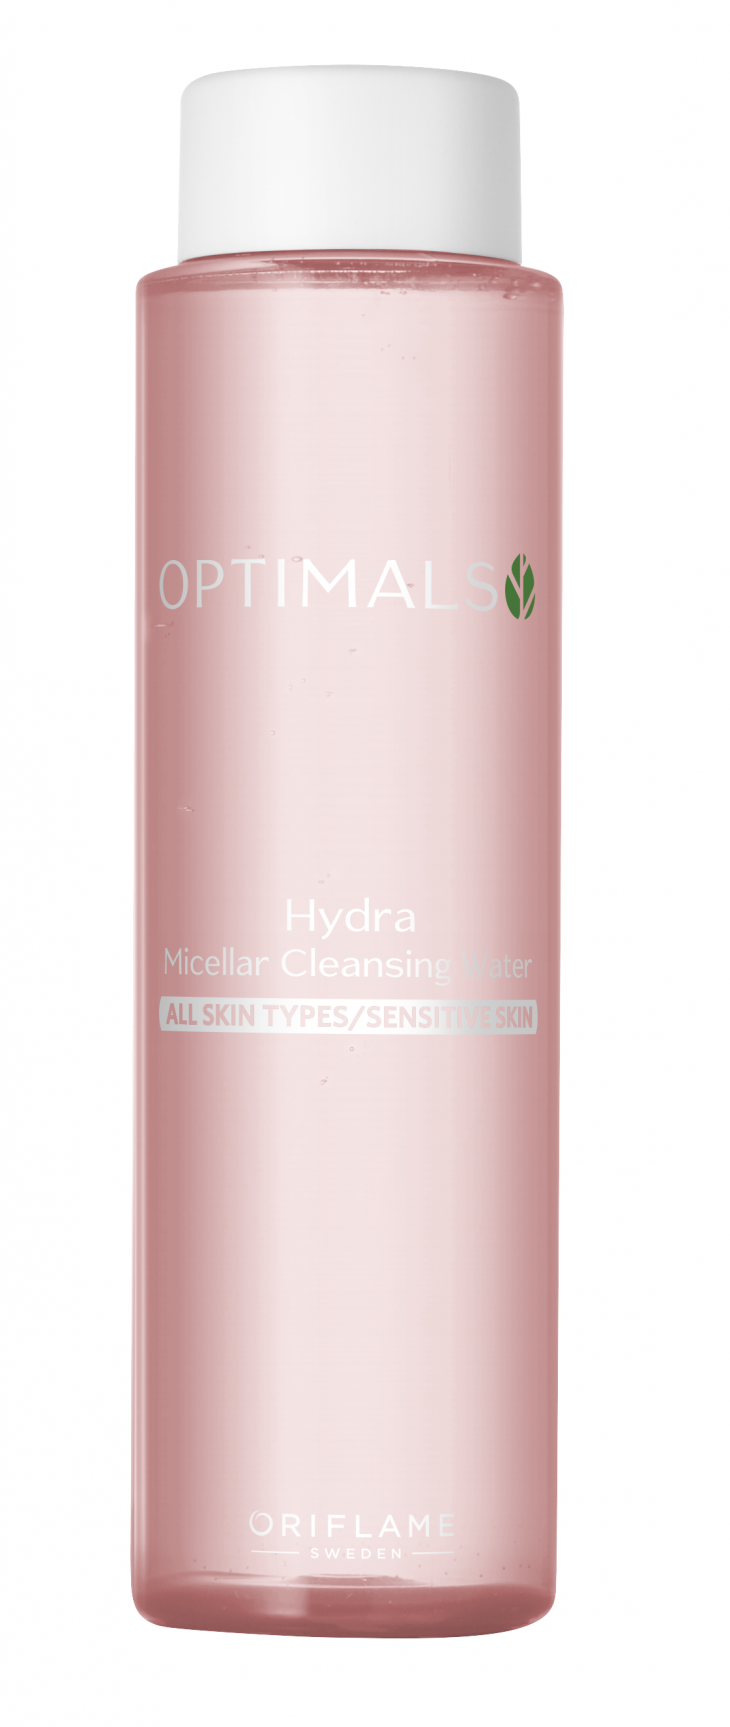 Мицеллярная вода Optimals Hydra Micellar Cleansing Water от Oriflame